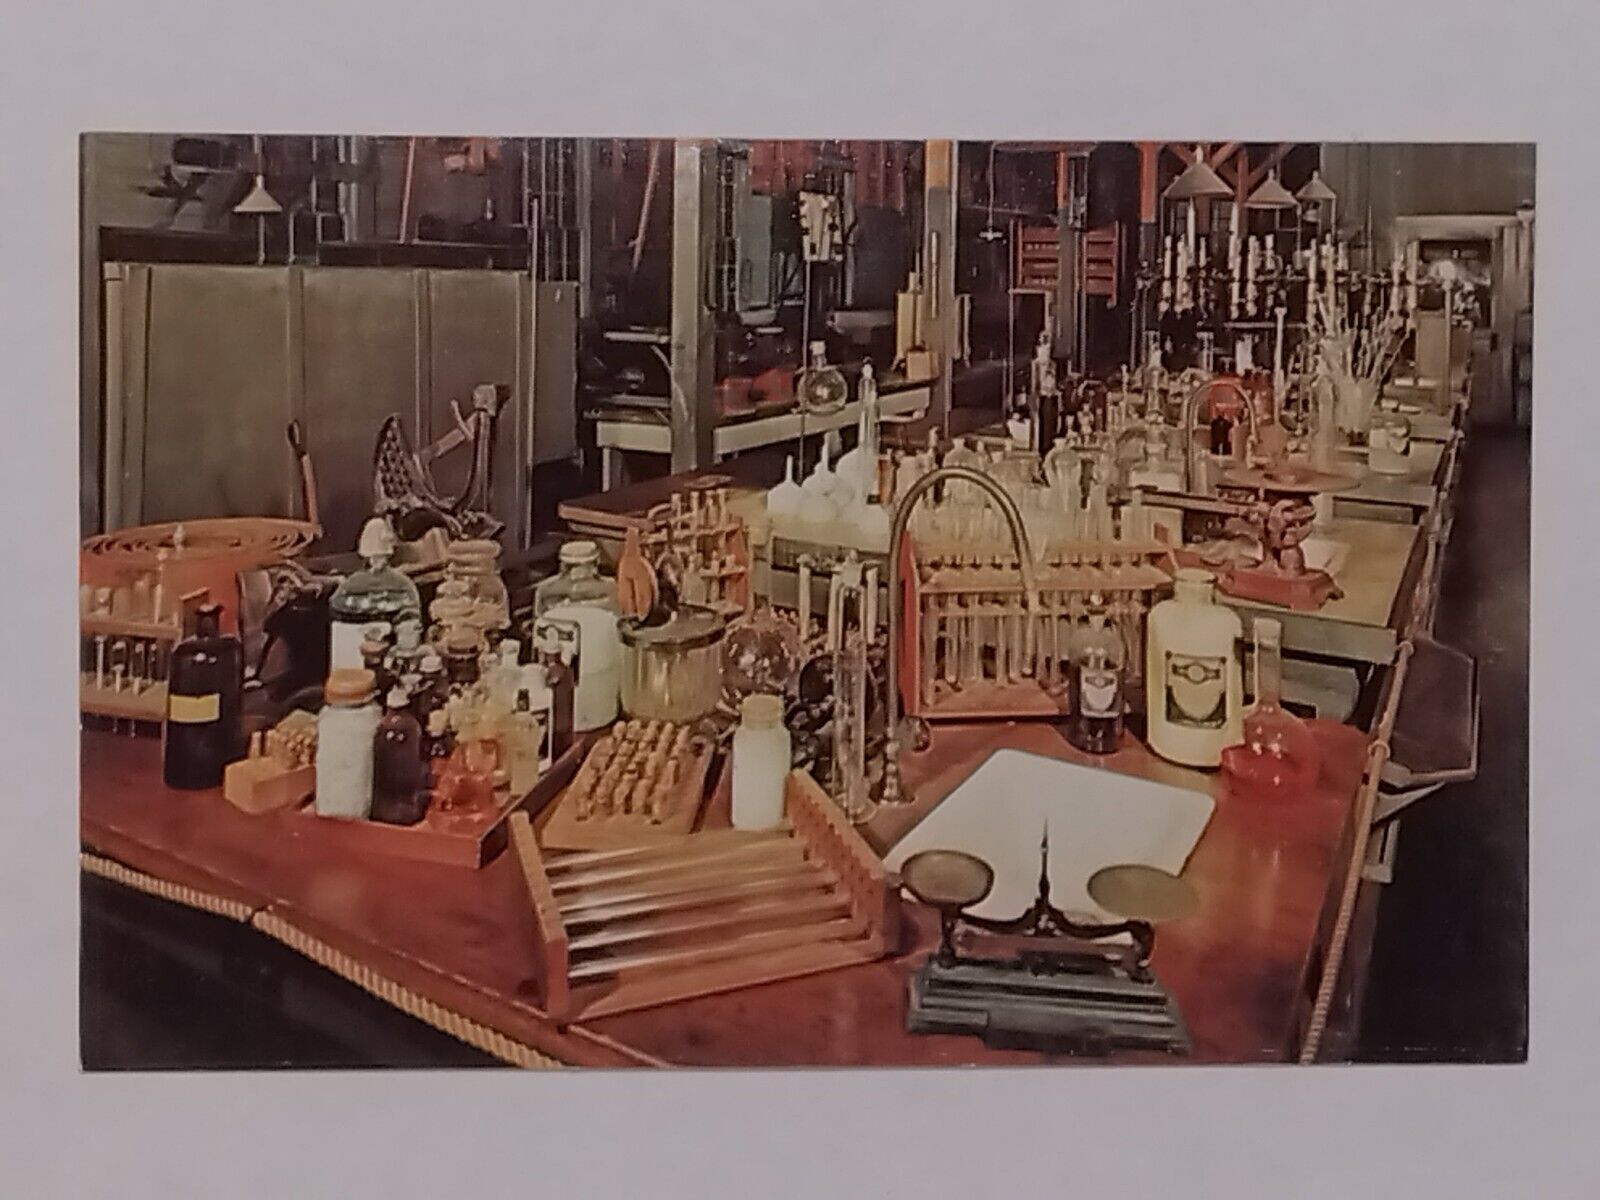  Edison Chemical Laboratory Winter Home Postcard